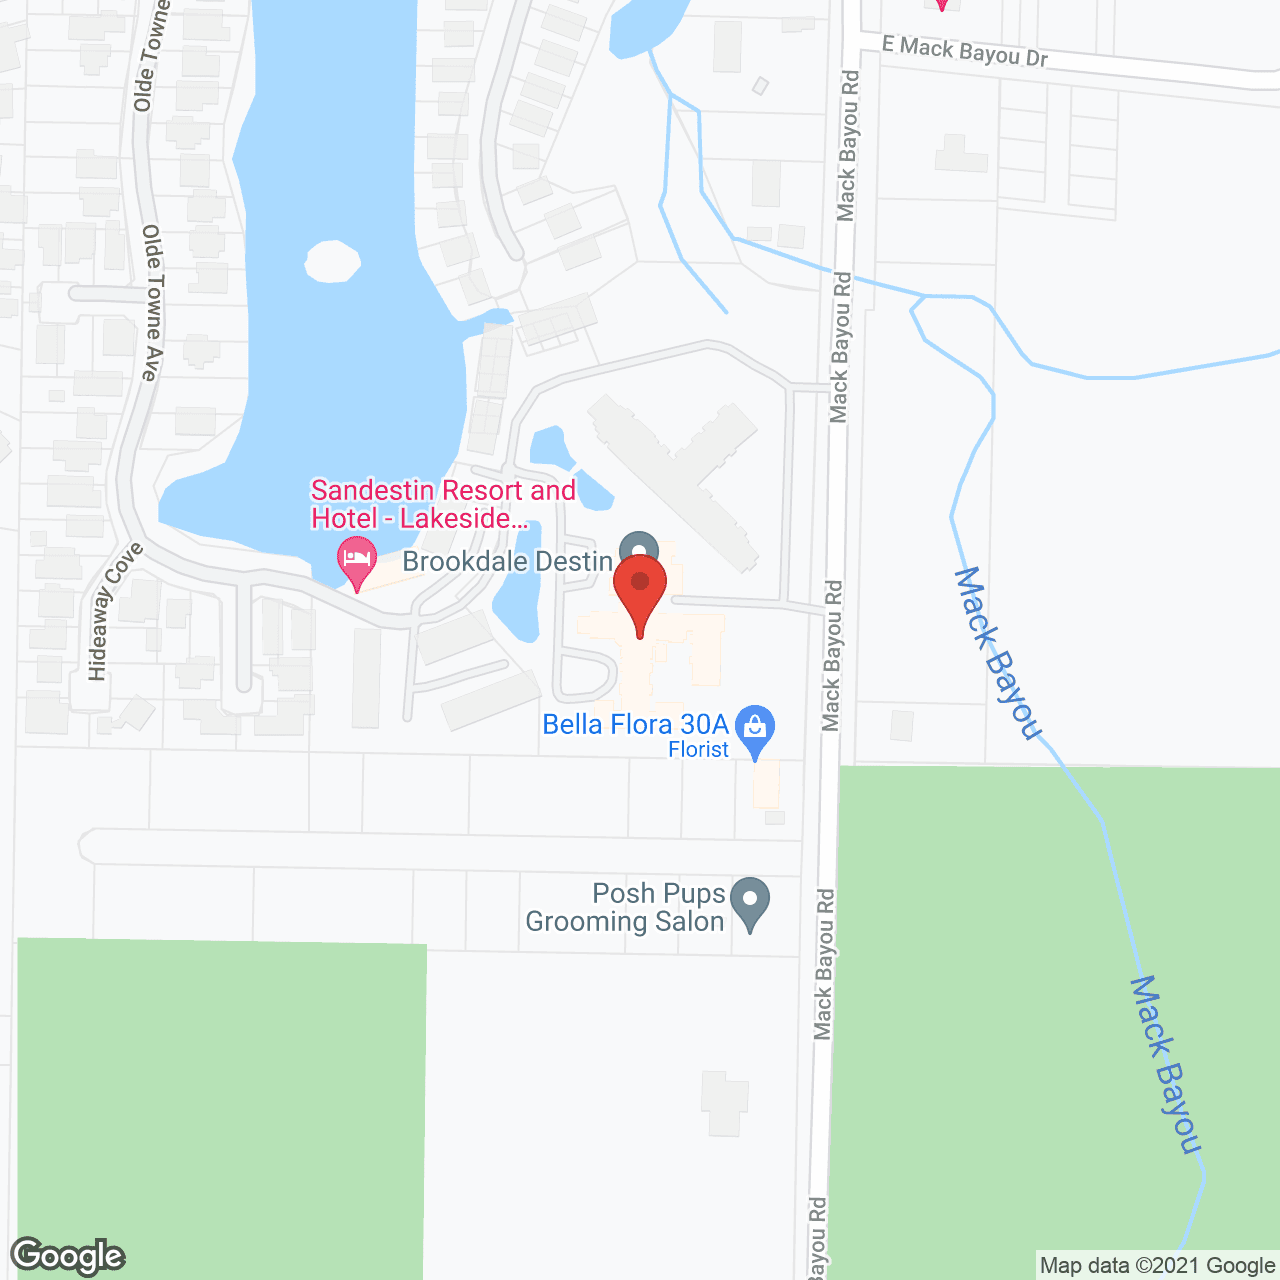 Brookdale Destin in google map